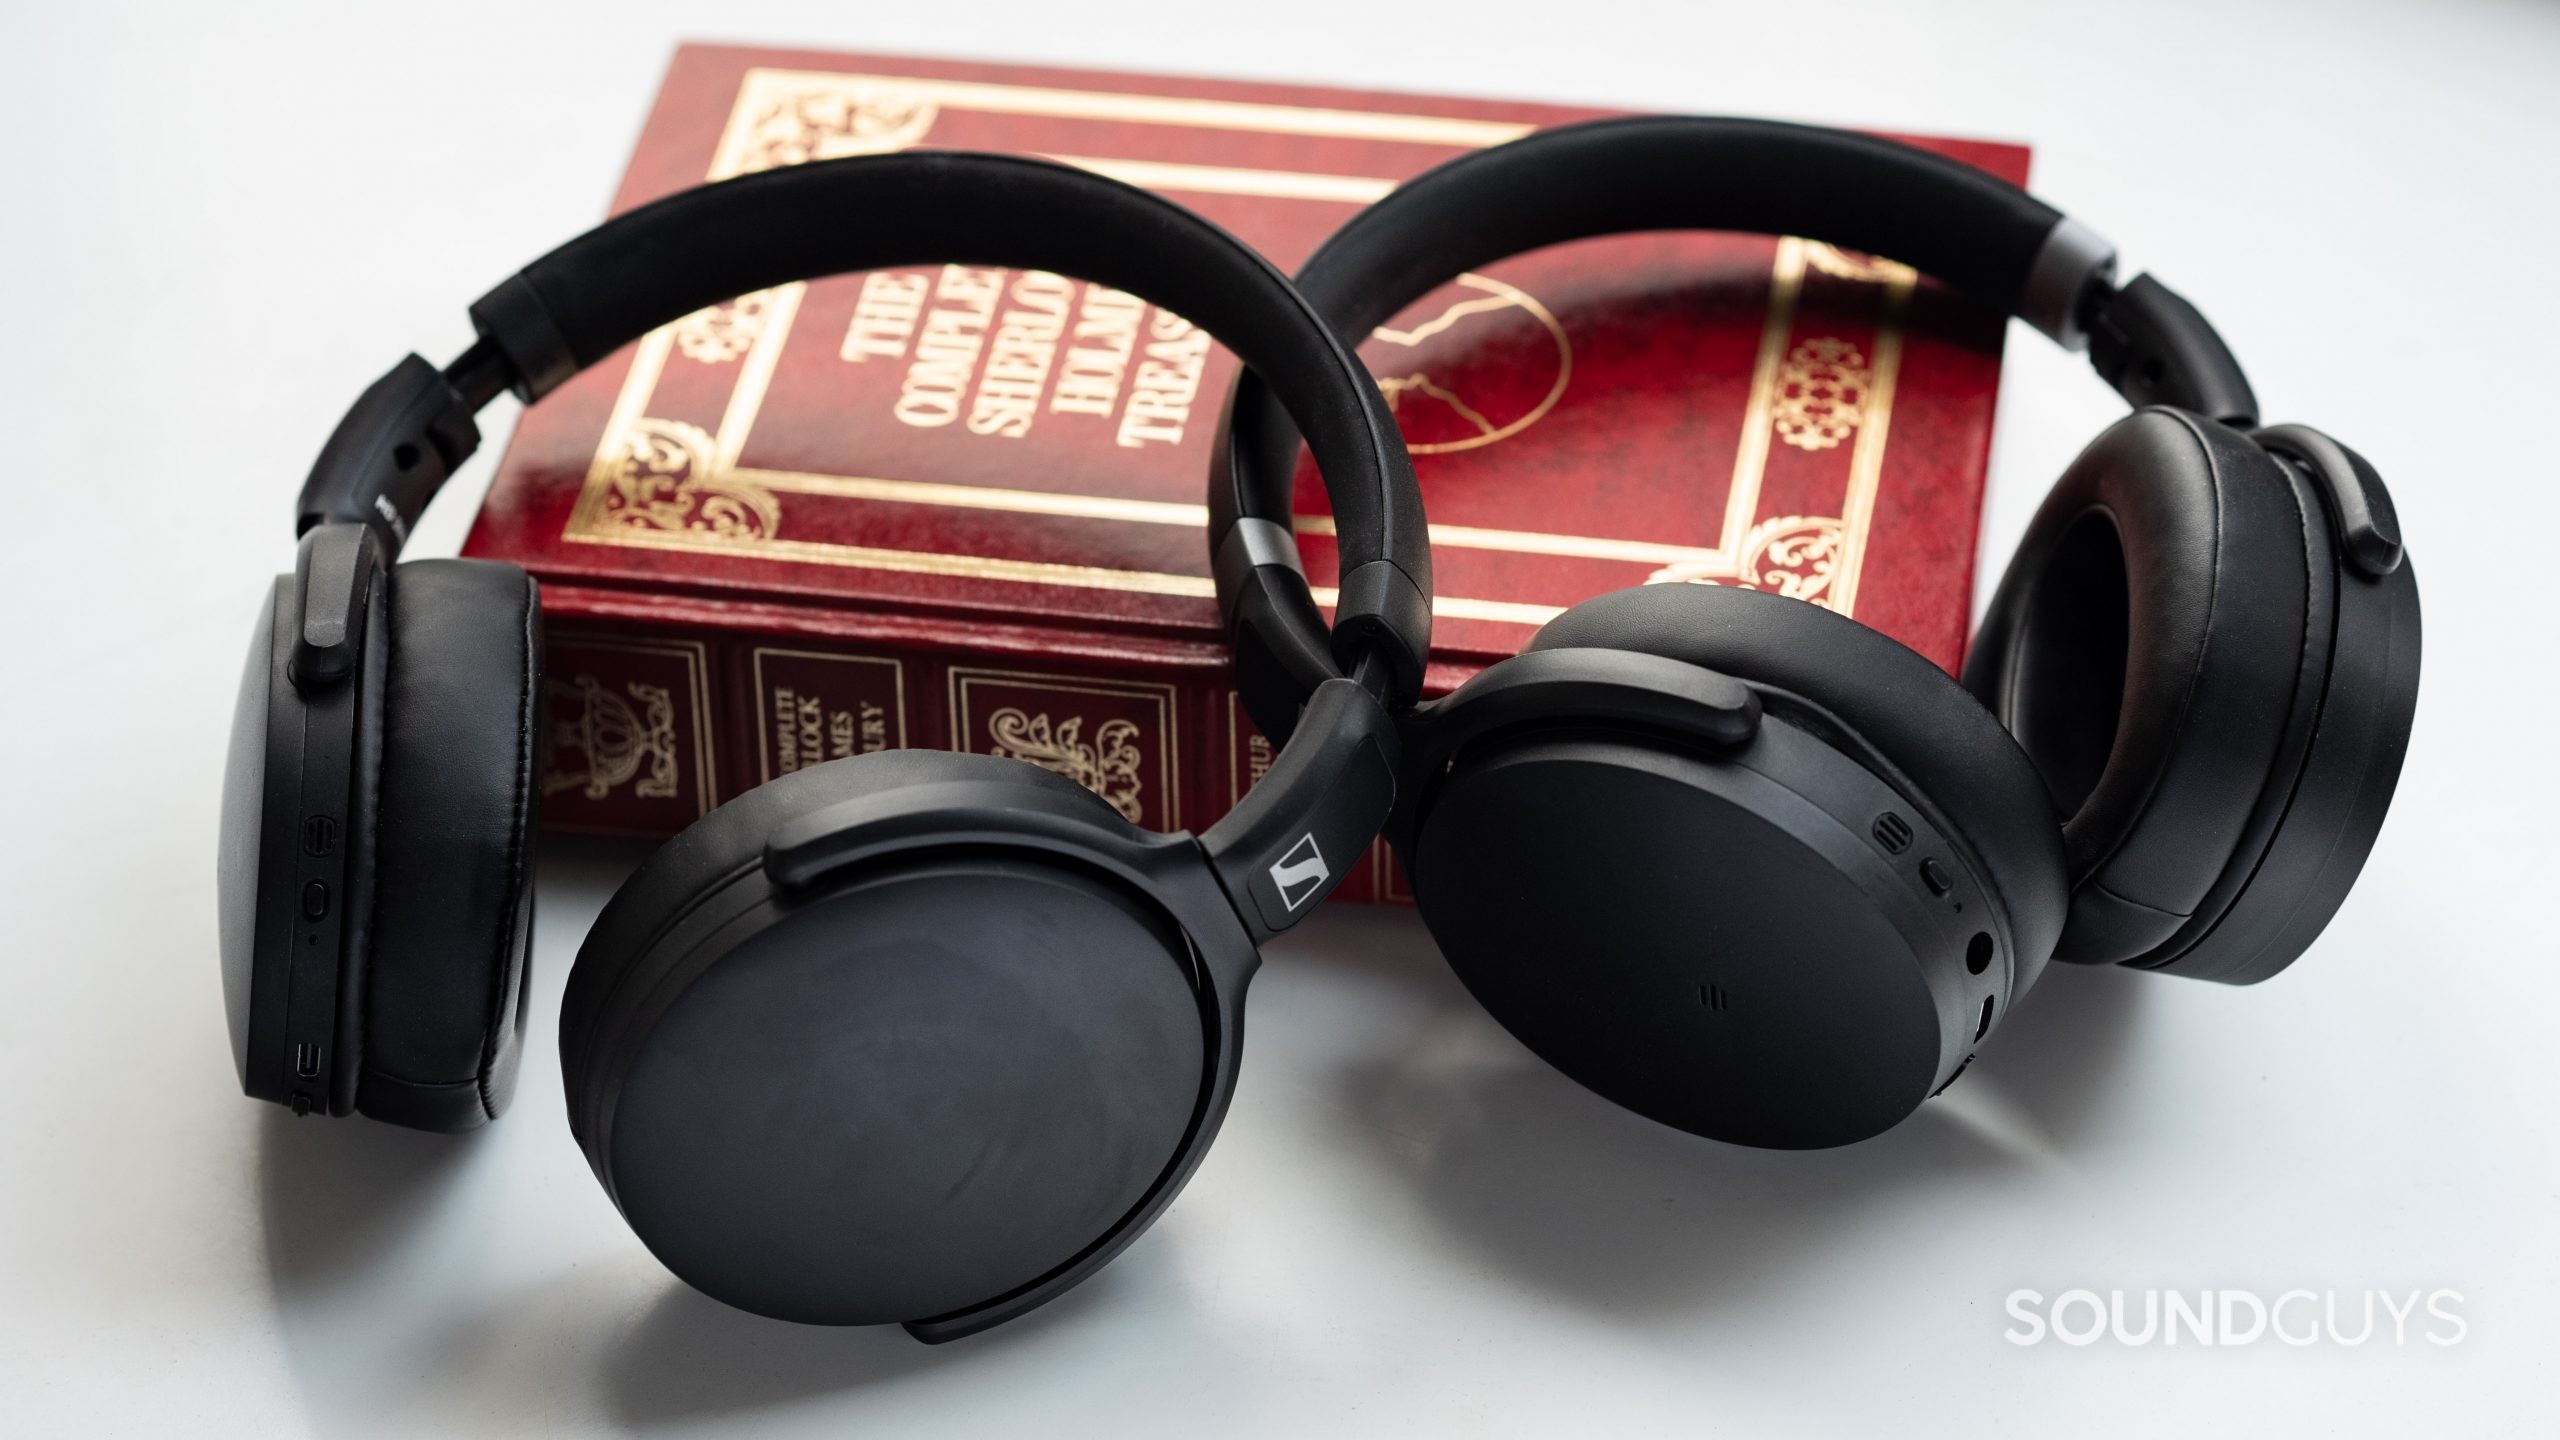 Soundcore Space Q45 Review: The Best Noise-Canceling Headphones Under $200